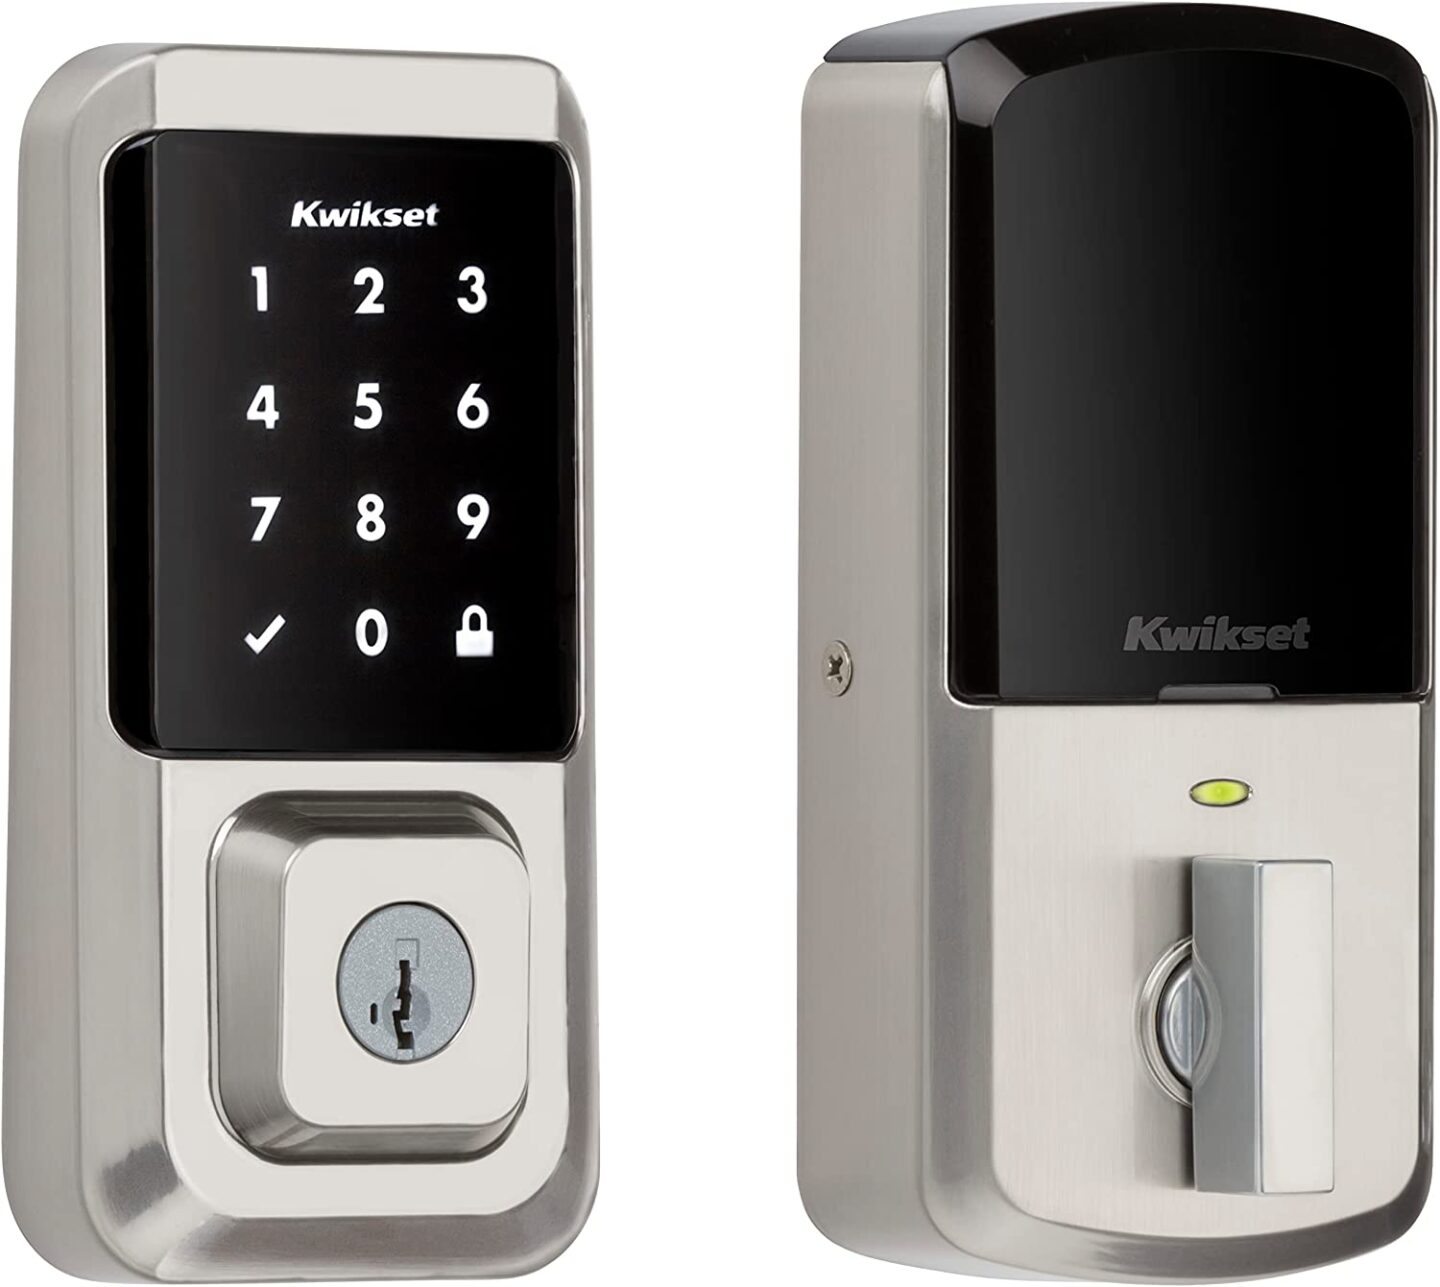 Kwikset Halo wifi smart lock keyless entry. #smartlock #keylessdoorlock